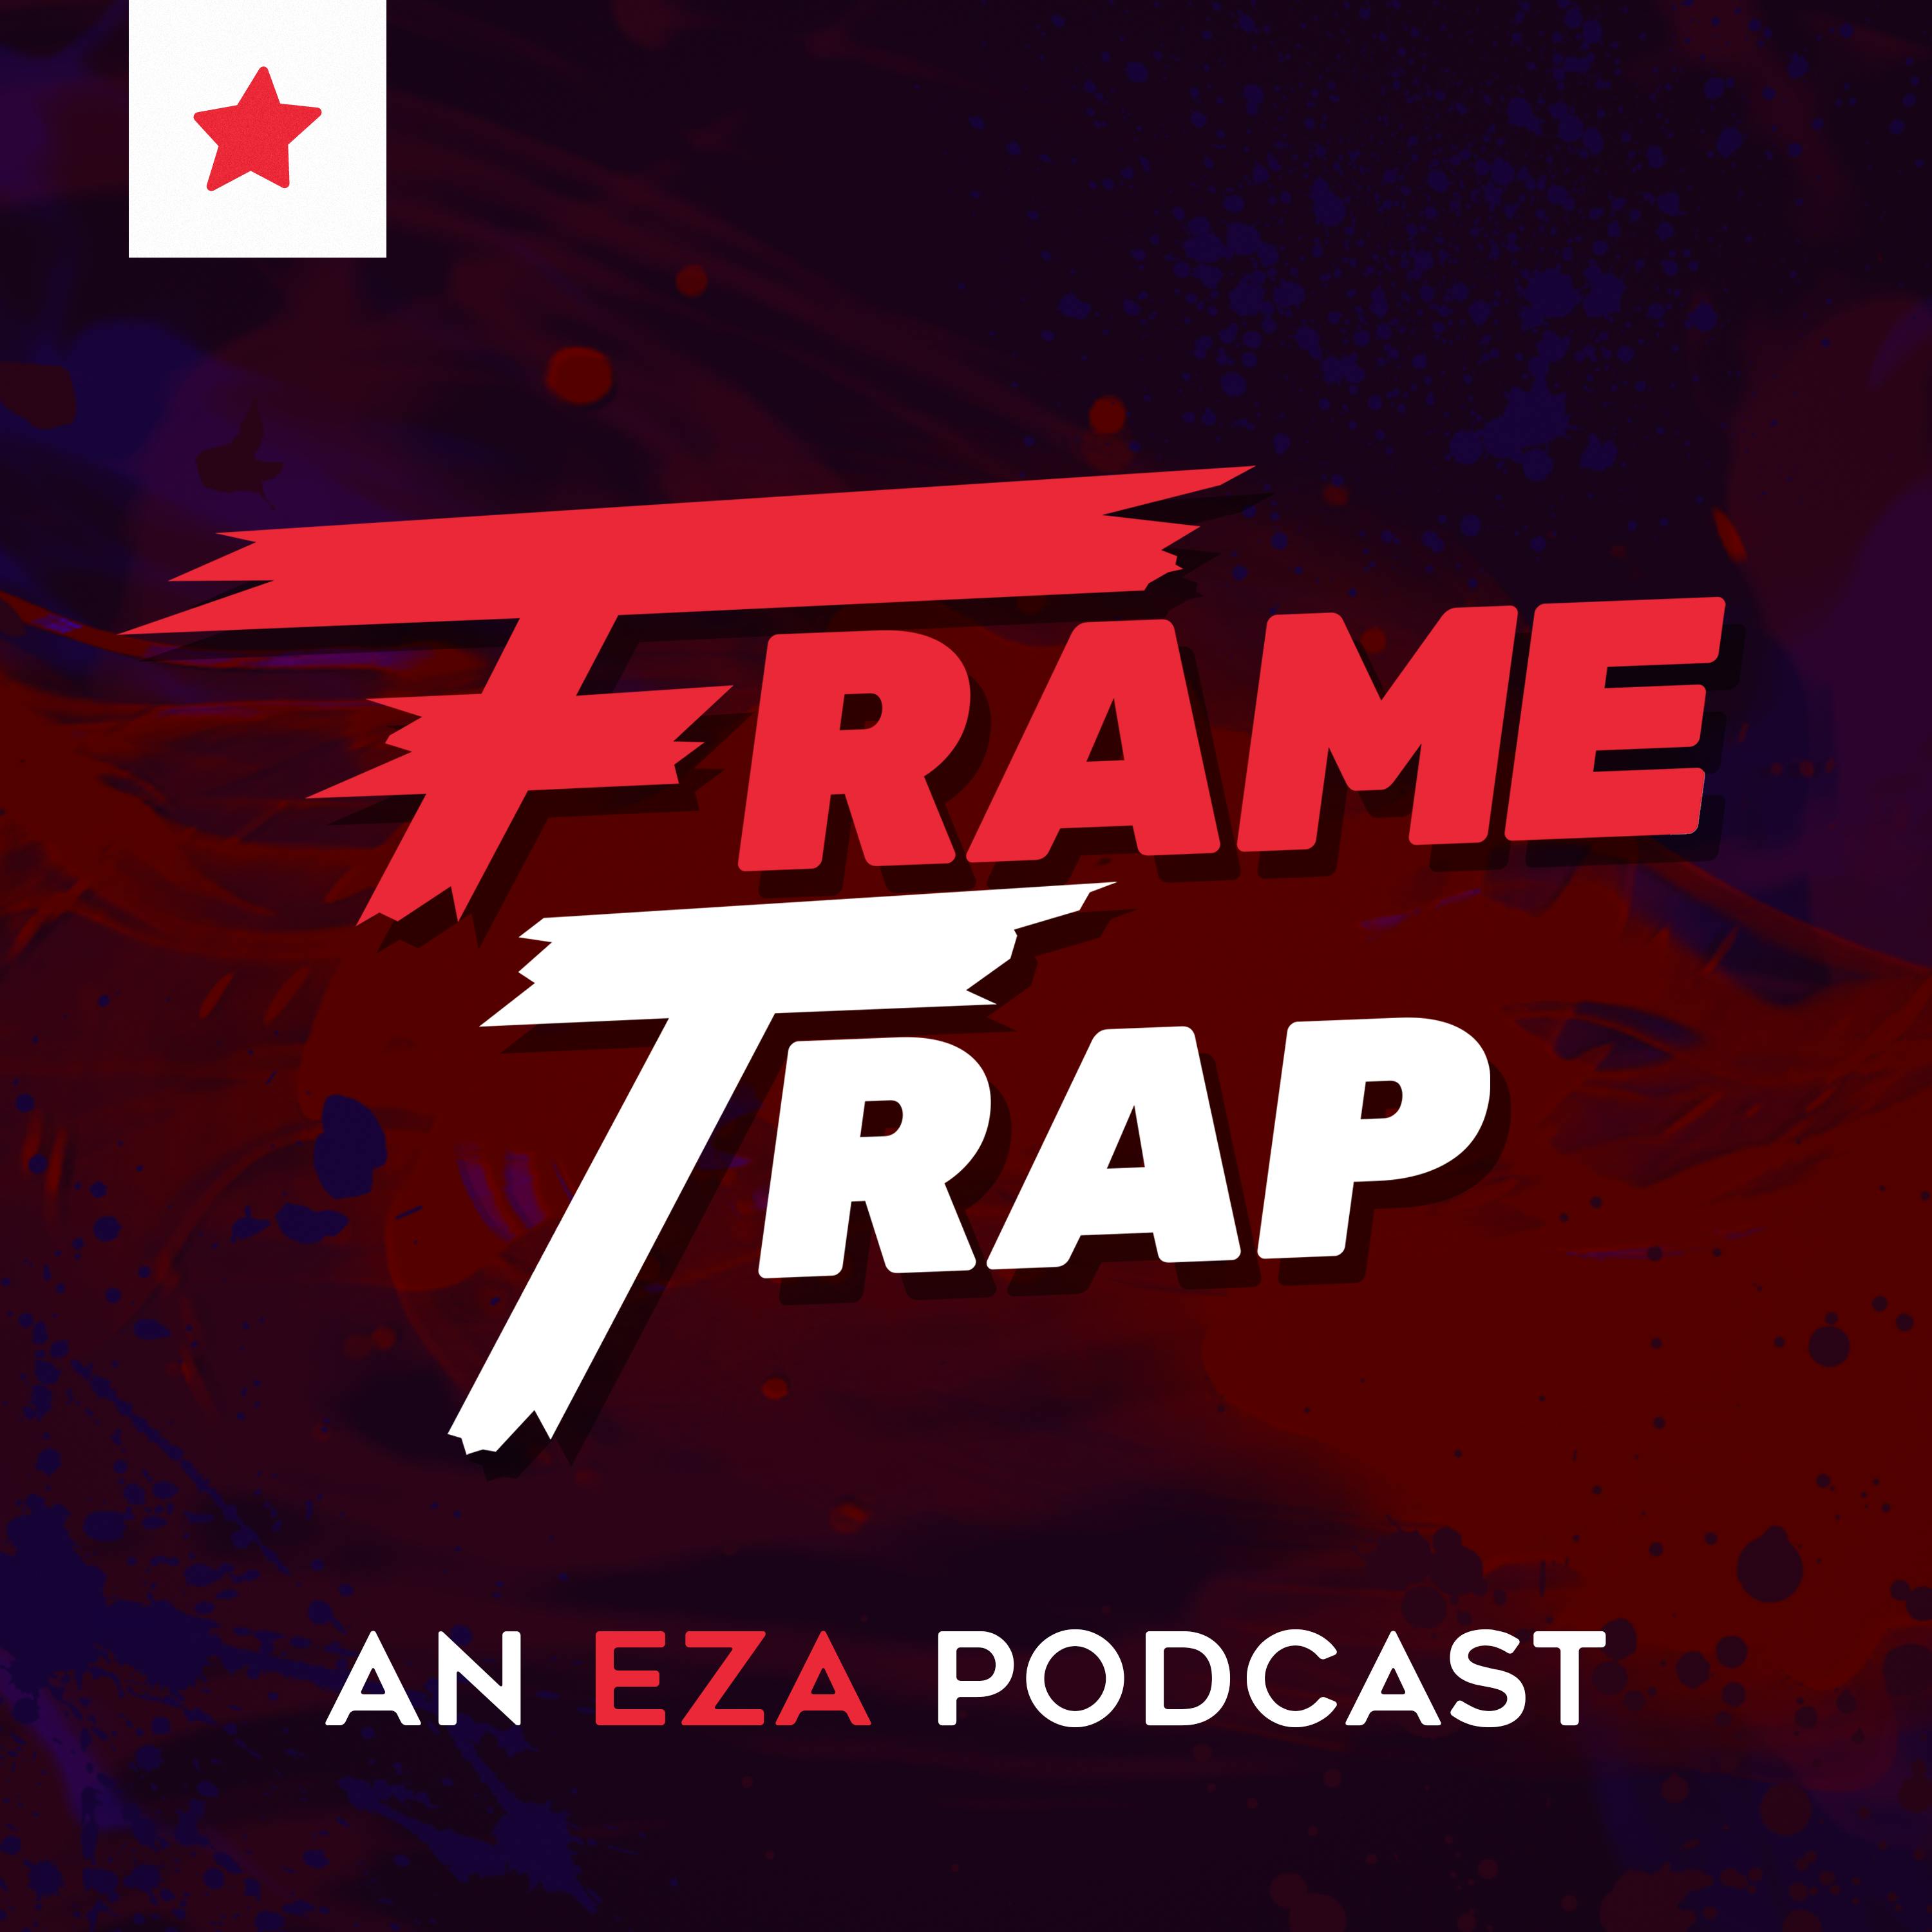 Frame - Trap Episode 184 "Redfall has Fallen"